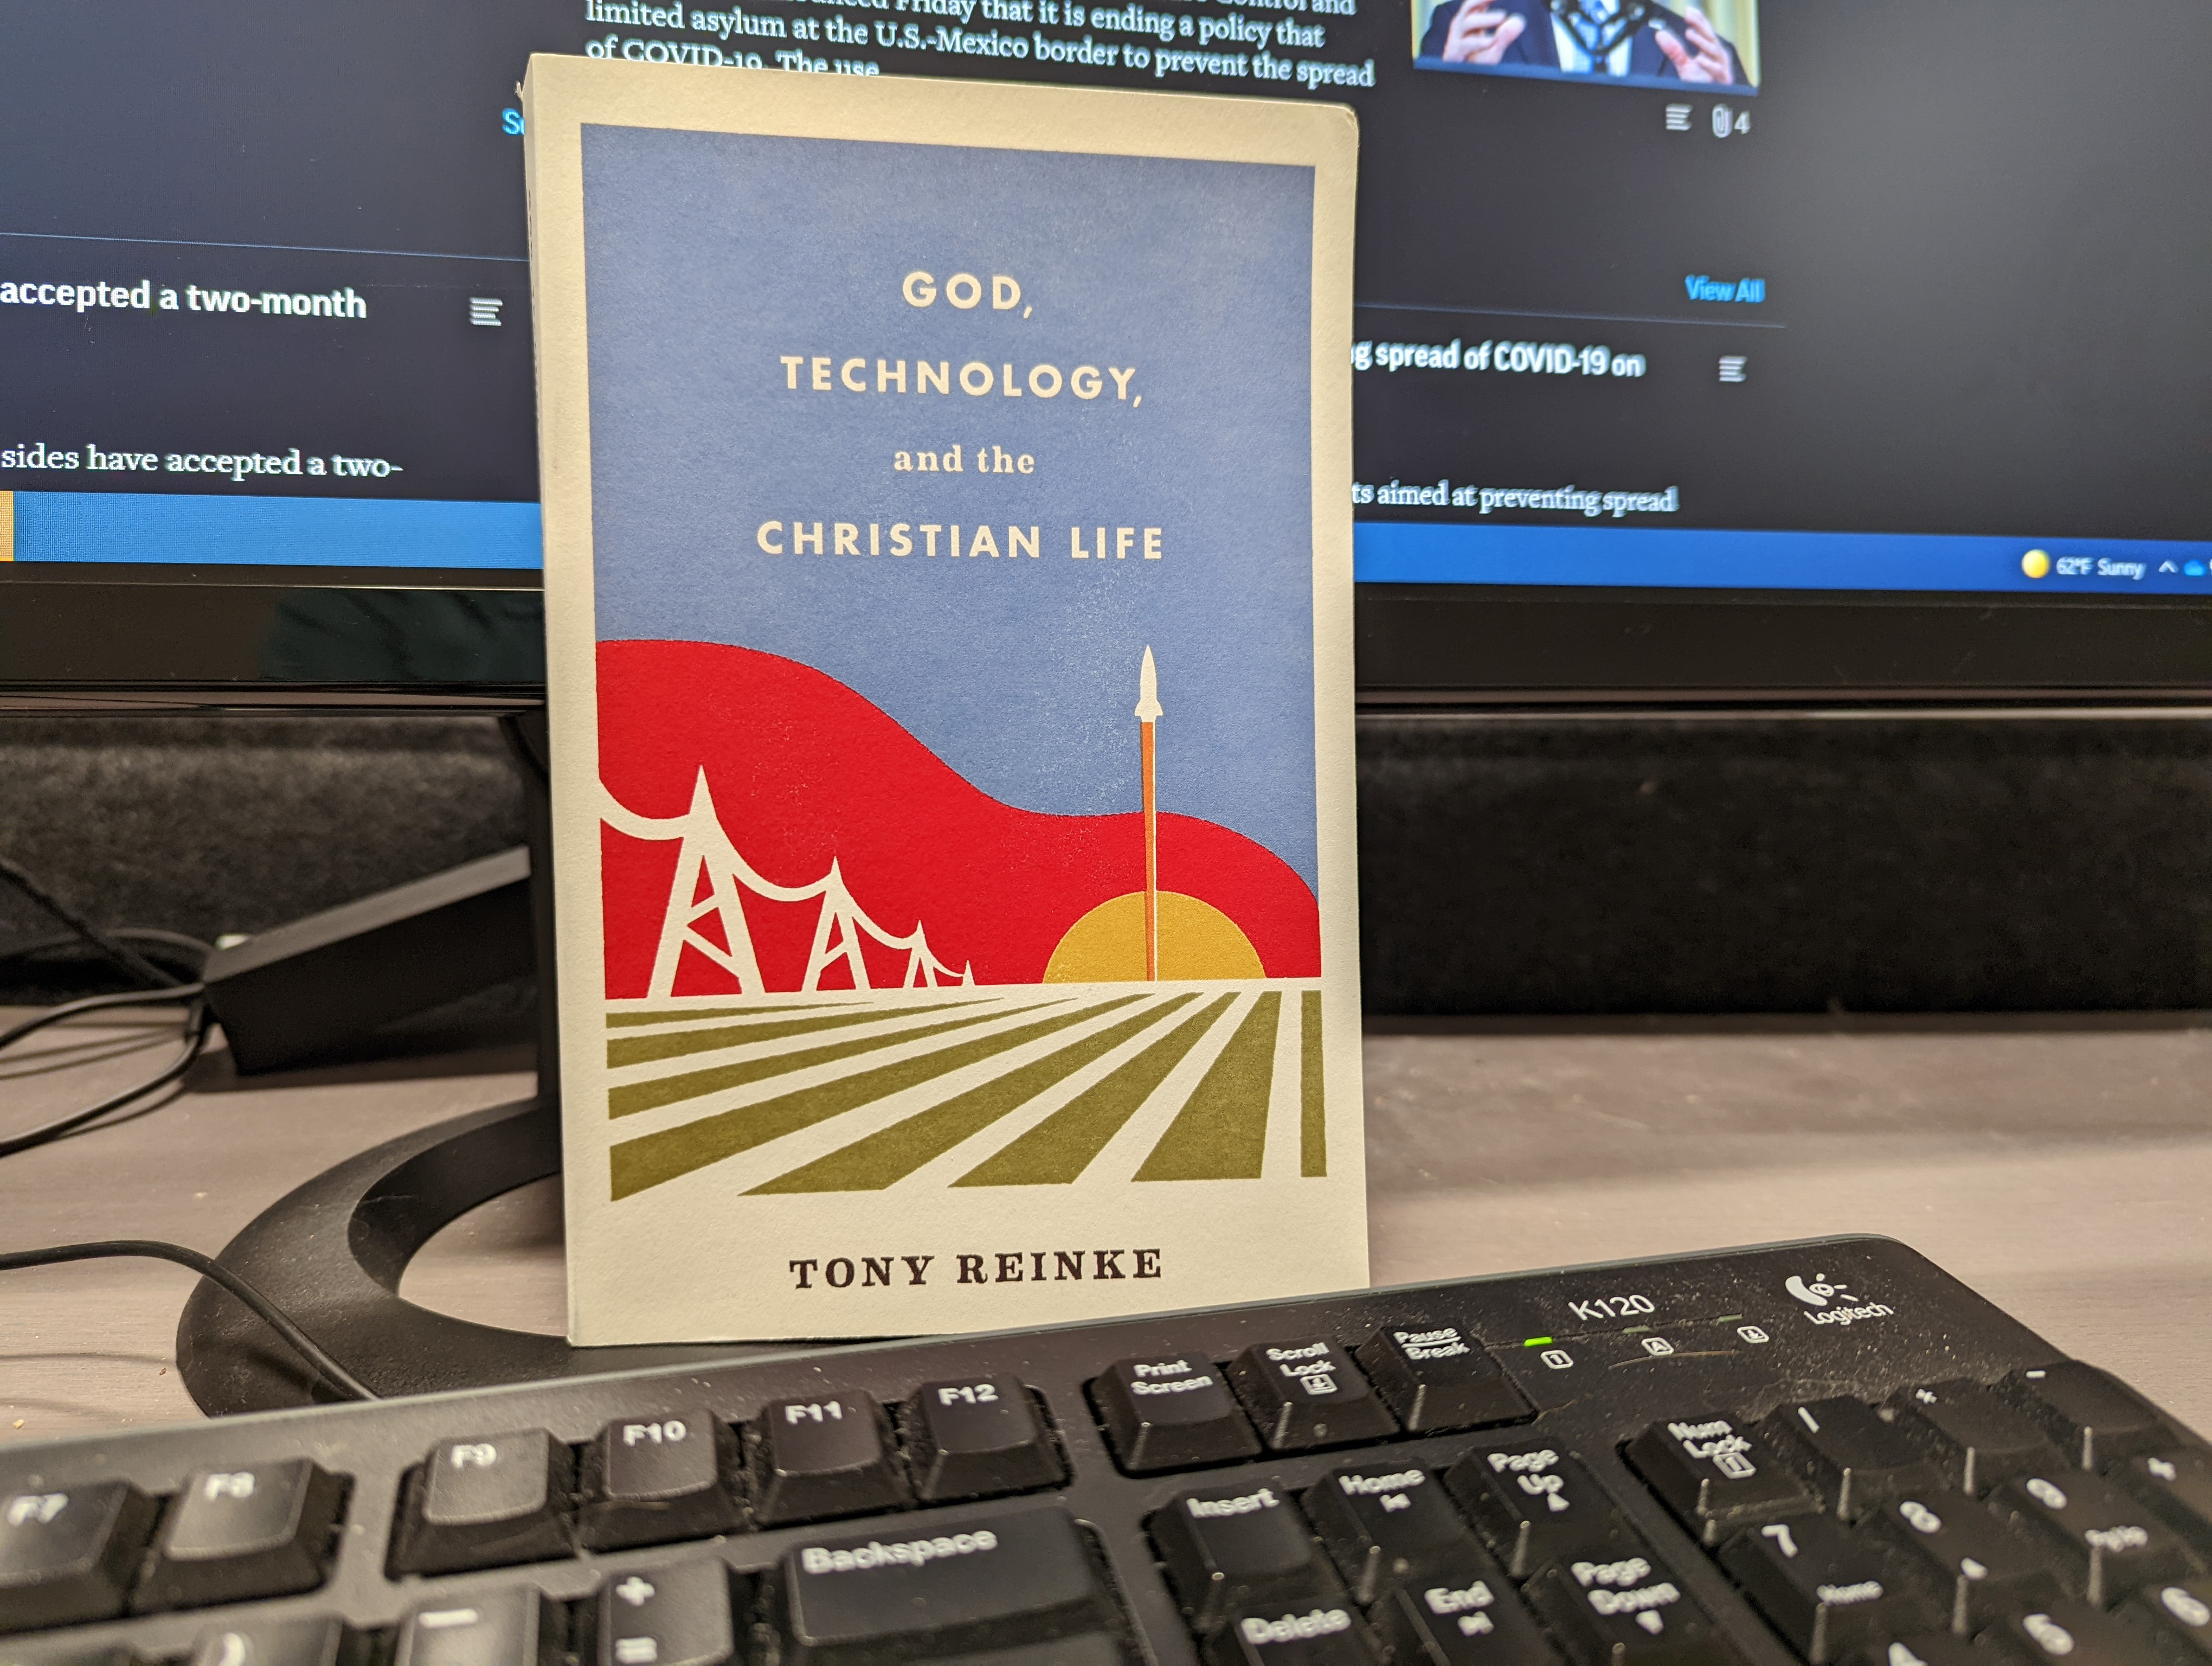 "God, Technology, and the Christian Life"